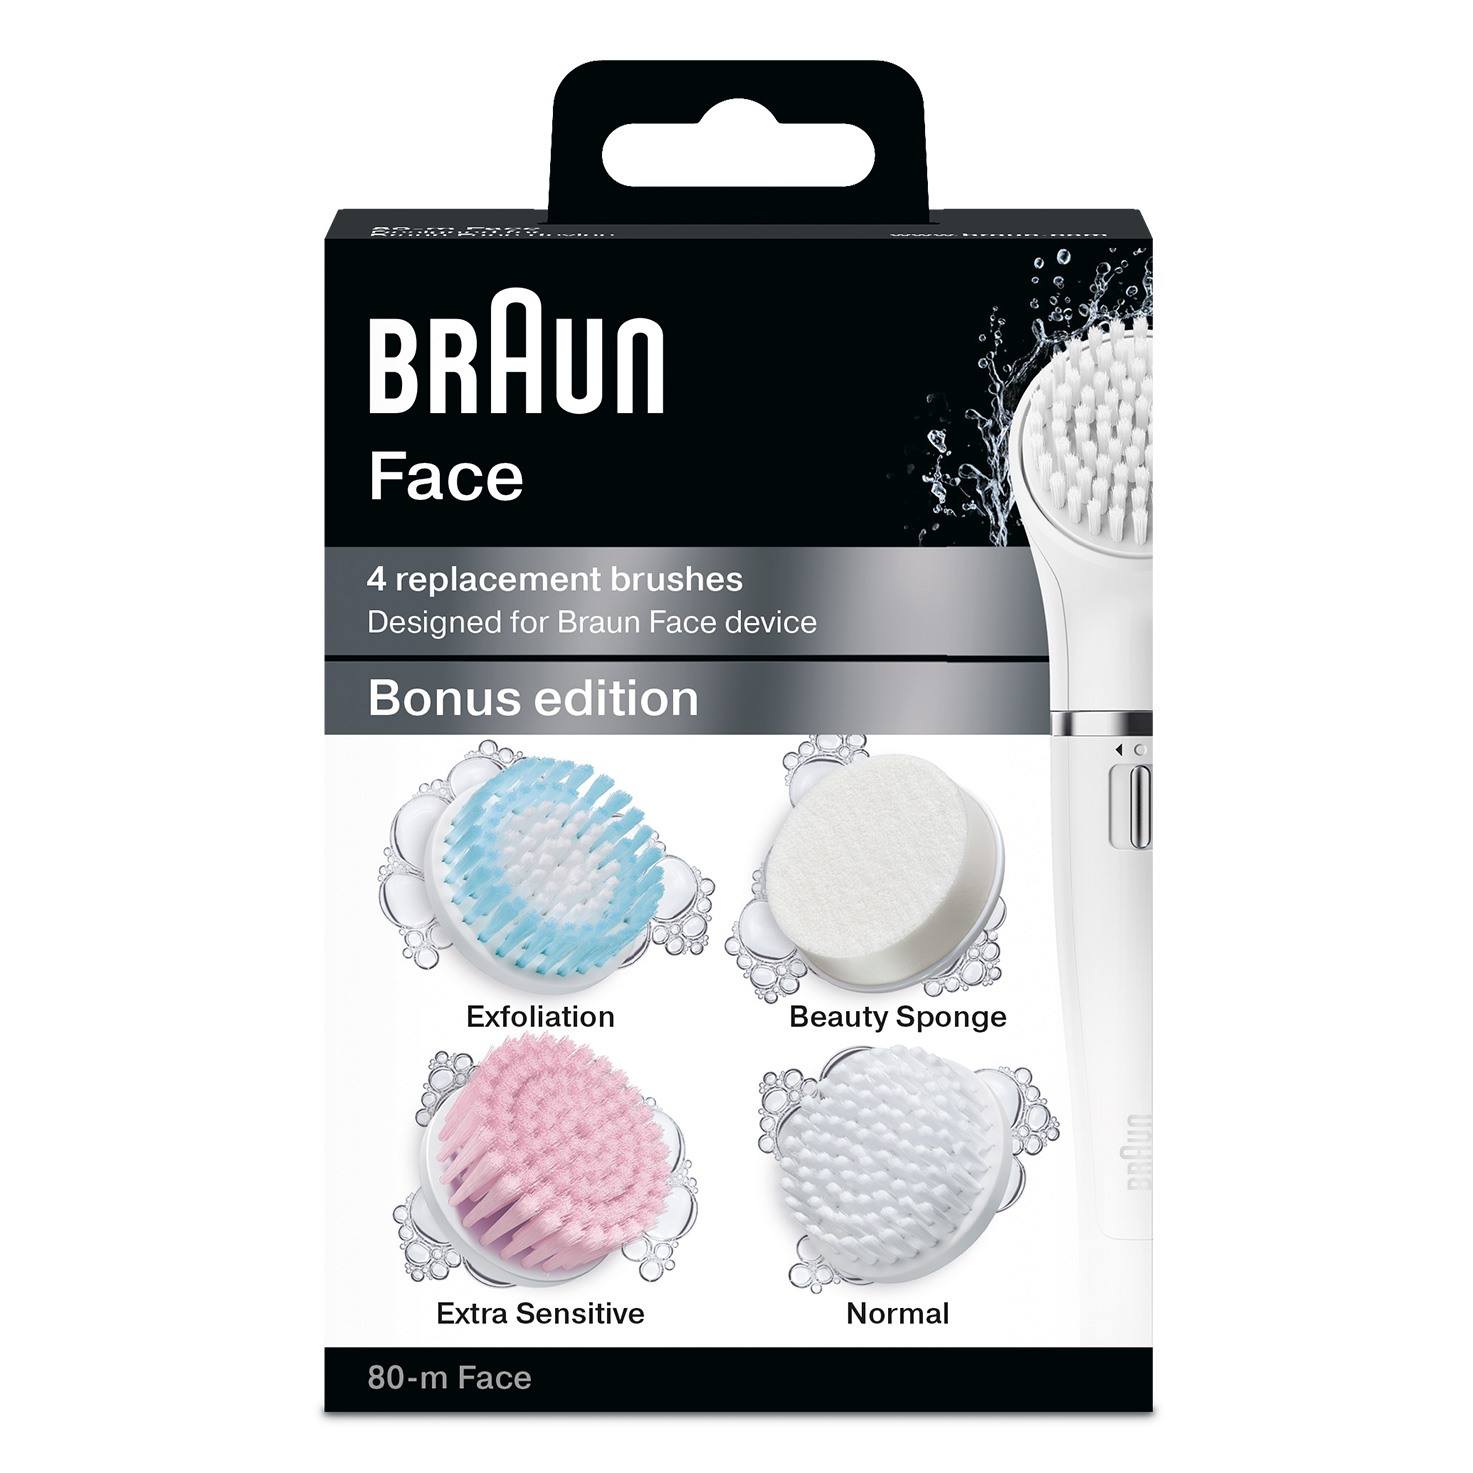 Braun facial cleansing brush refill duo pack 80-m packaging